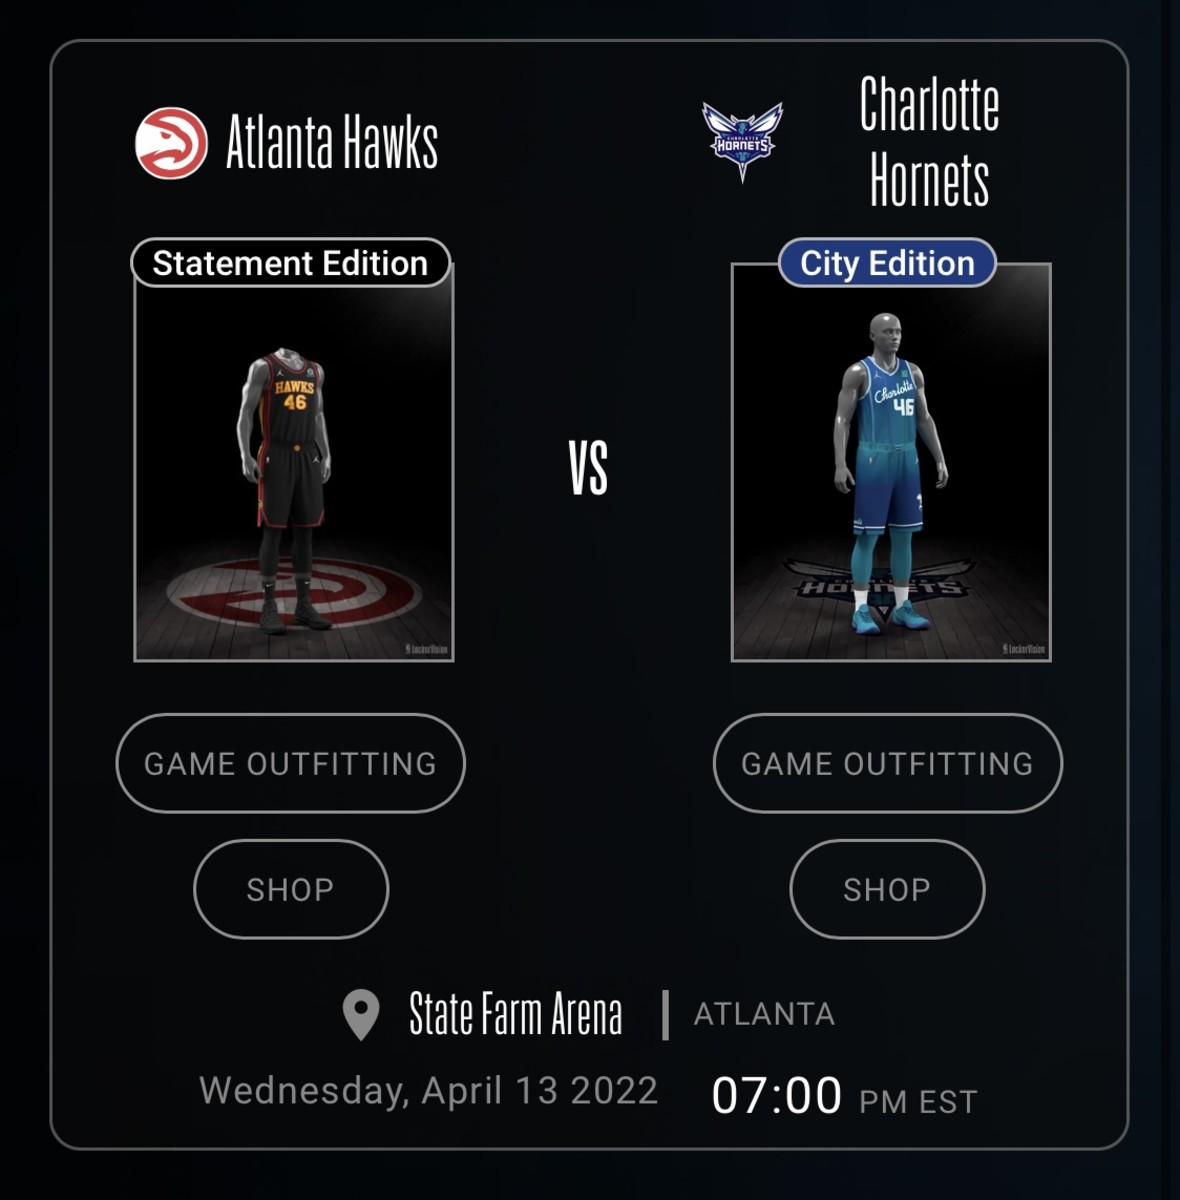 Charlotte Hornets at Atlanta Hawks uniforms for April 13, 2022.